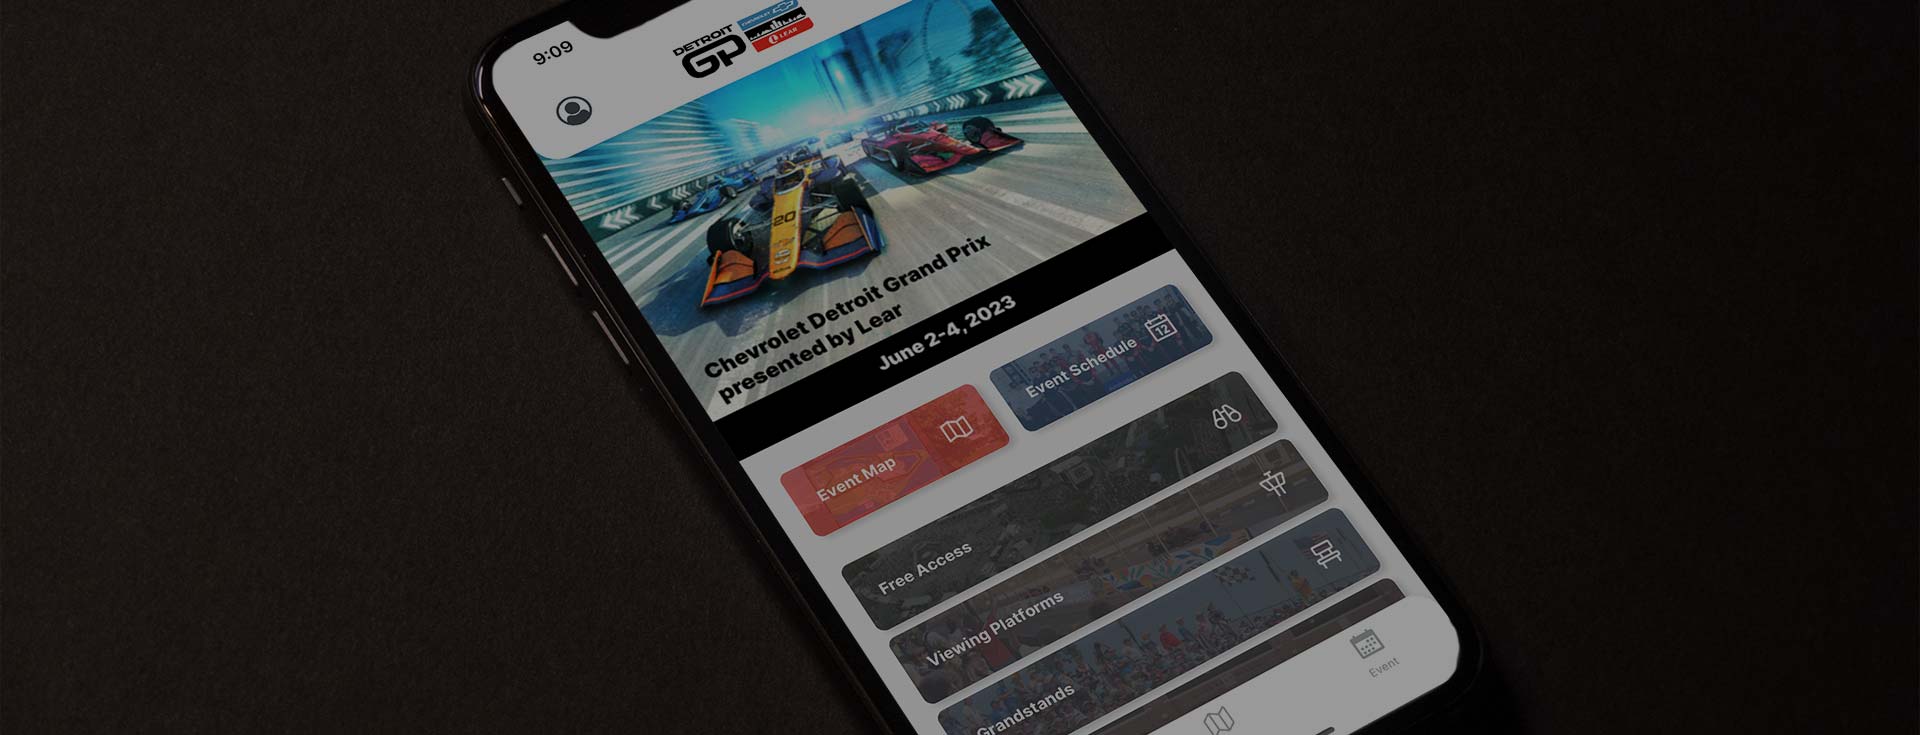 Download the New Detroit GP App